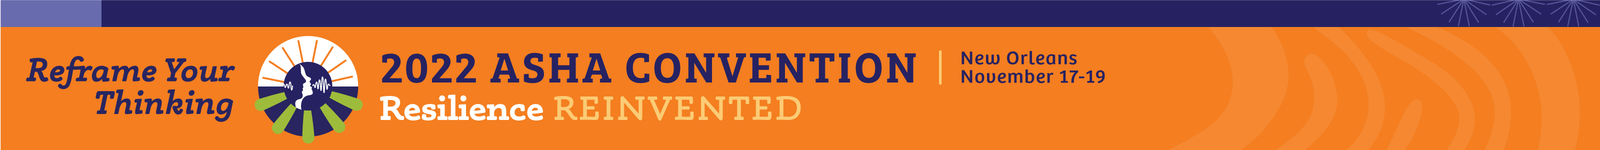 2022 ASHA Convention logo